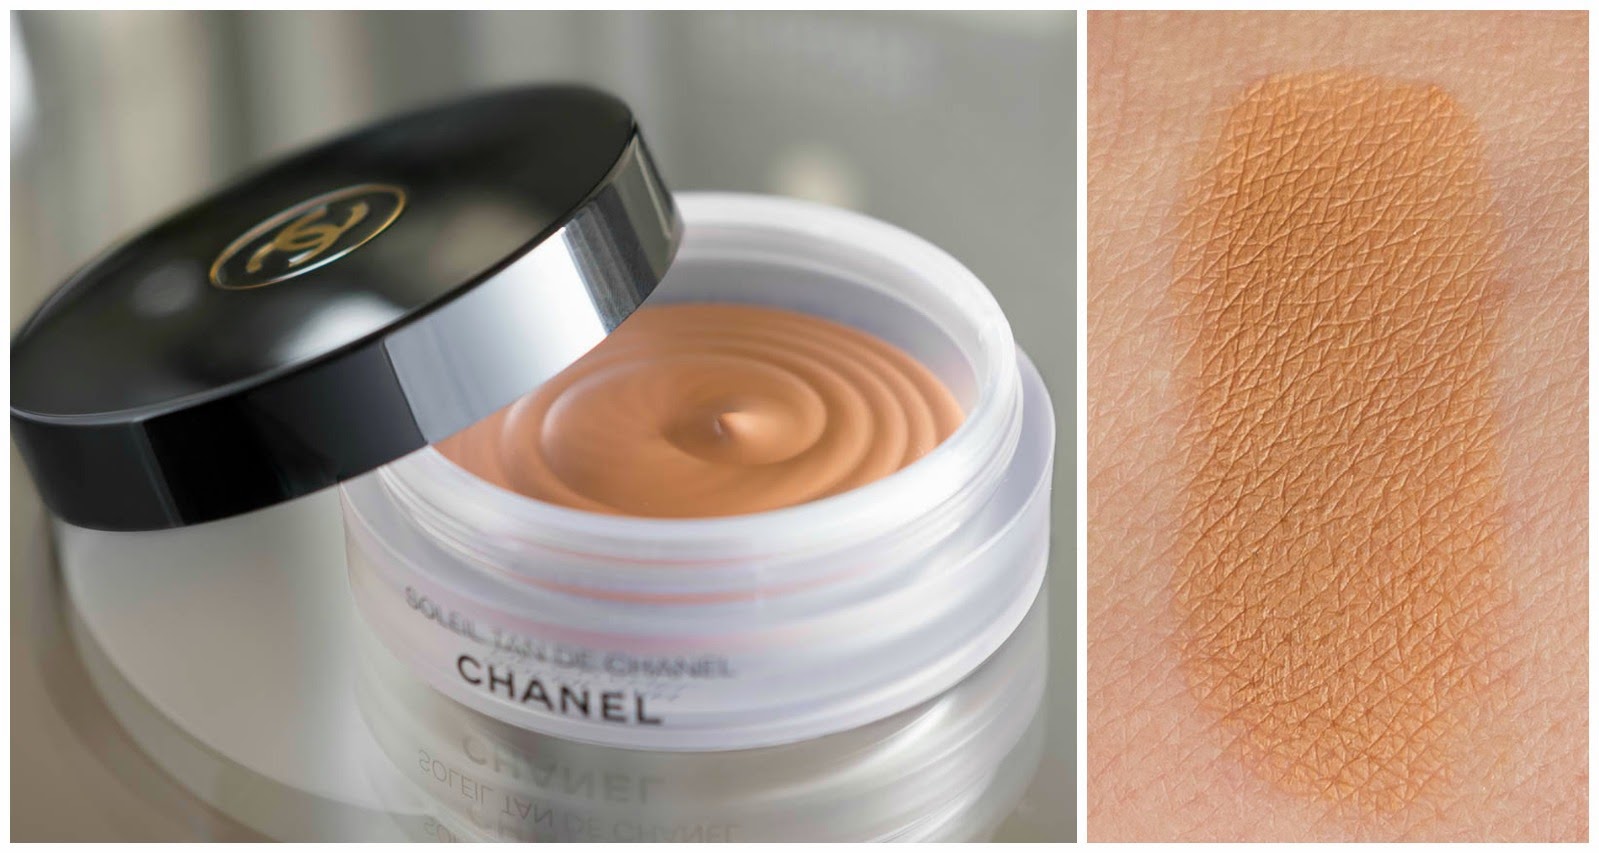 Chanel Original Soleil Tan de Chanel Bronzing Makeup Base Review